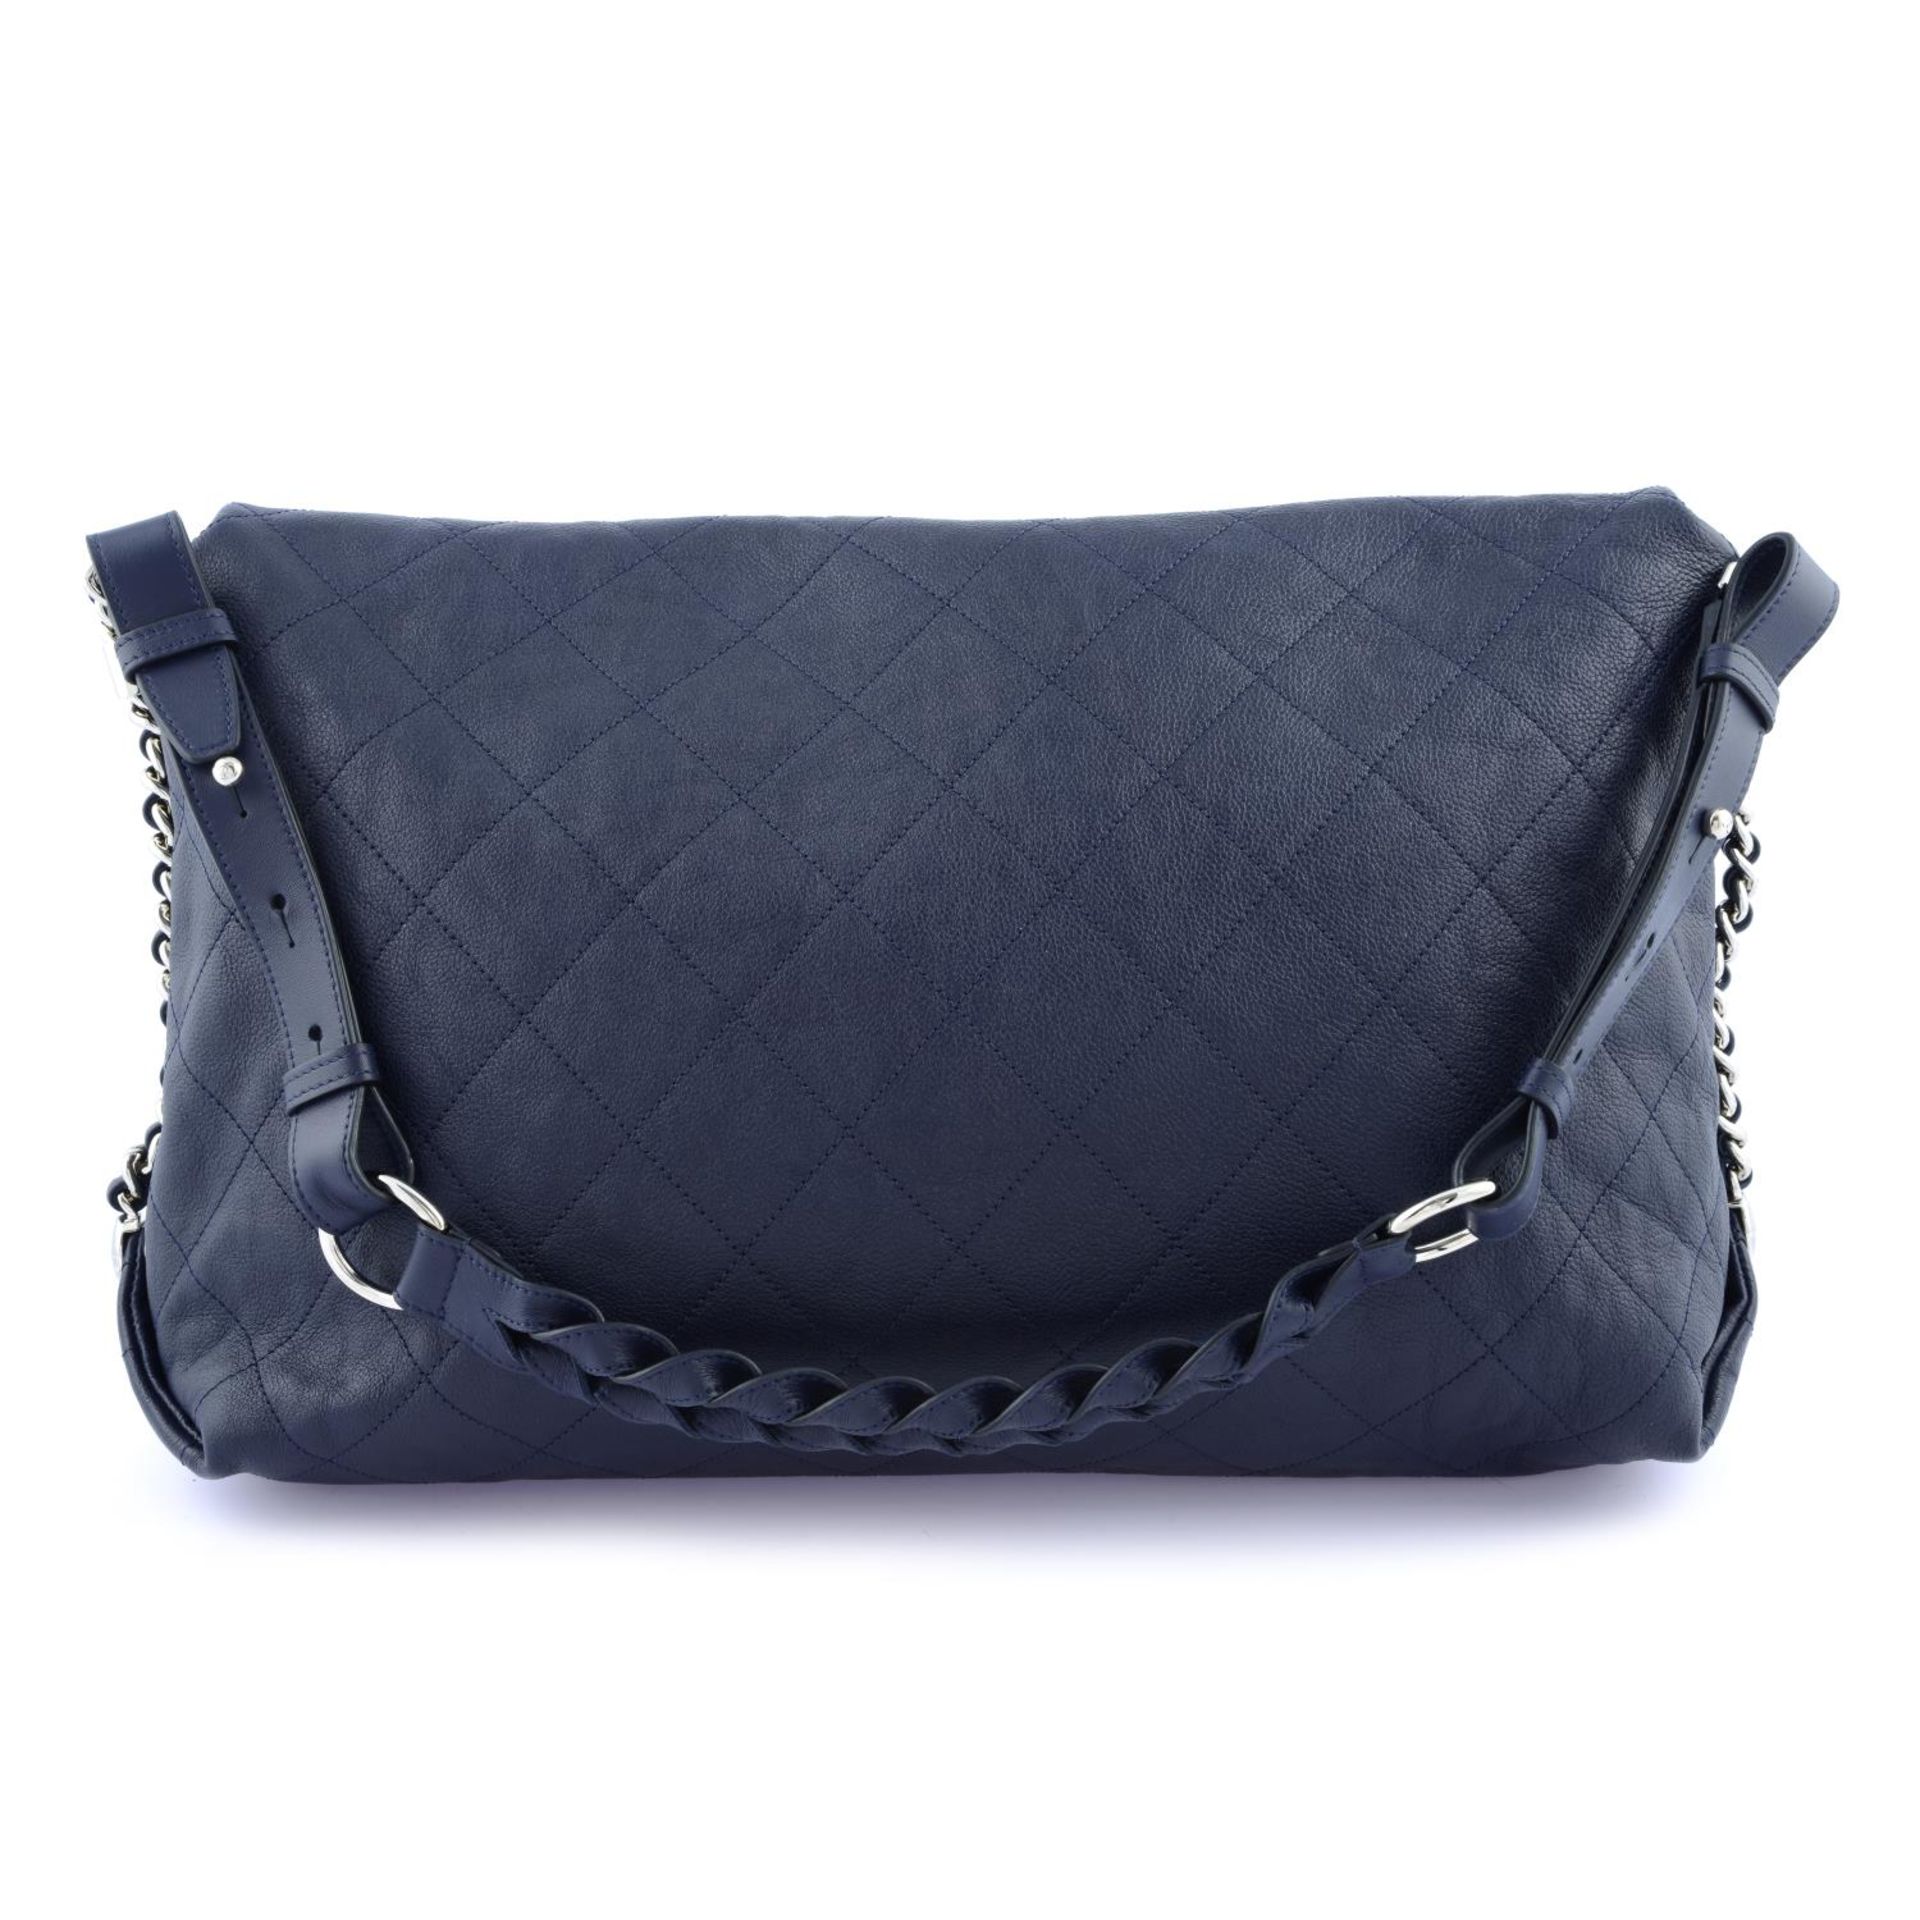 CHANEL - an XL Flap handbag. - Image 2 of 4